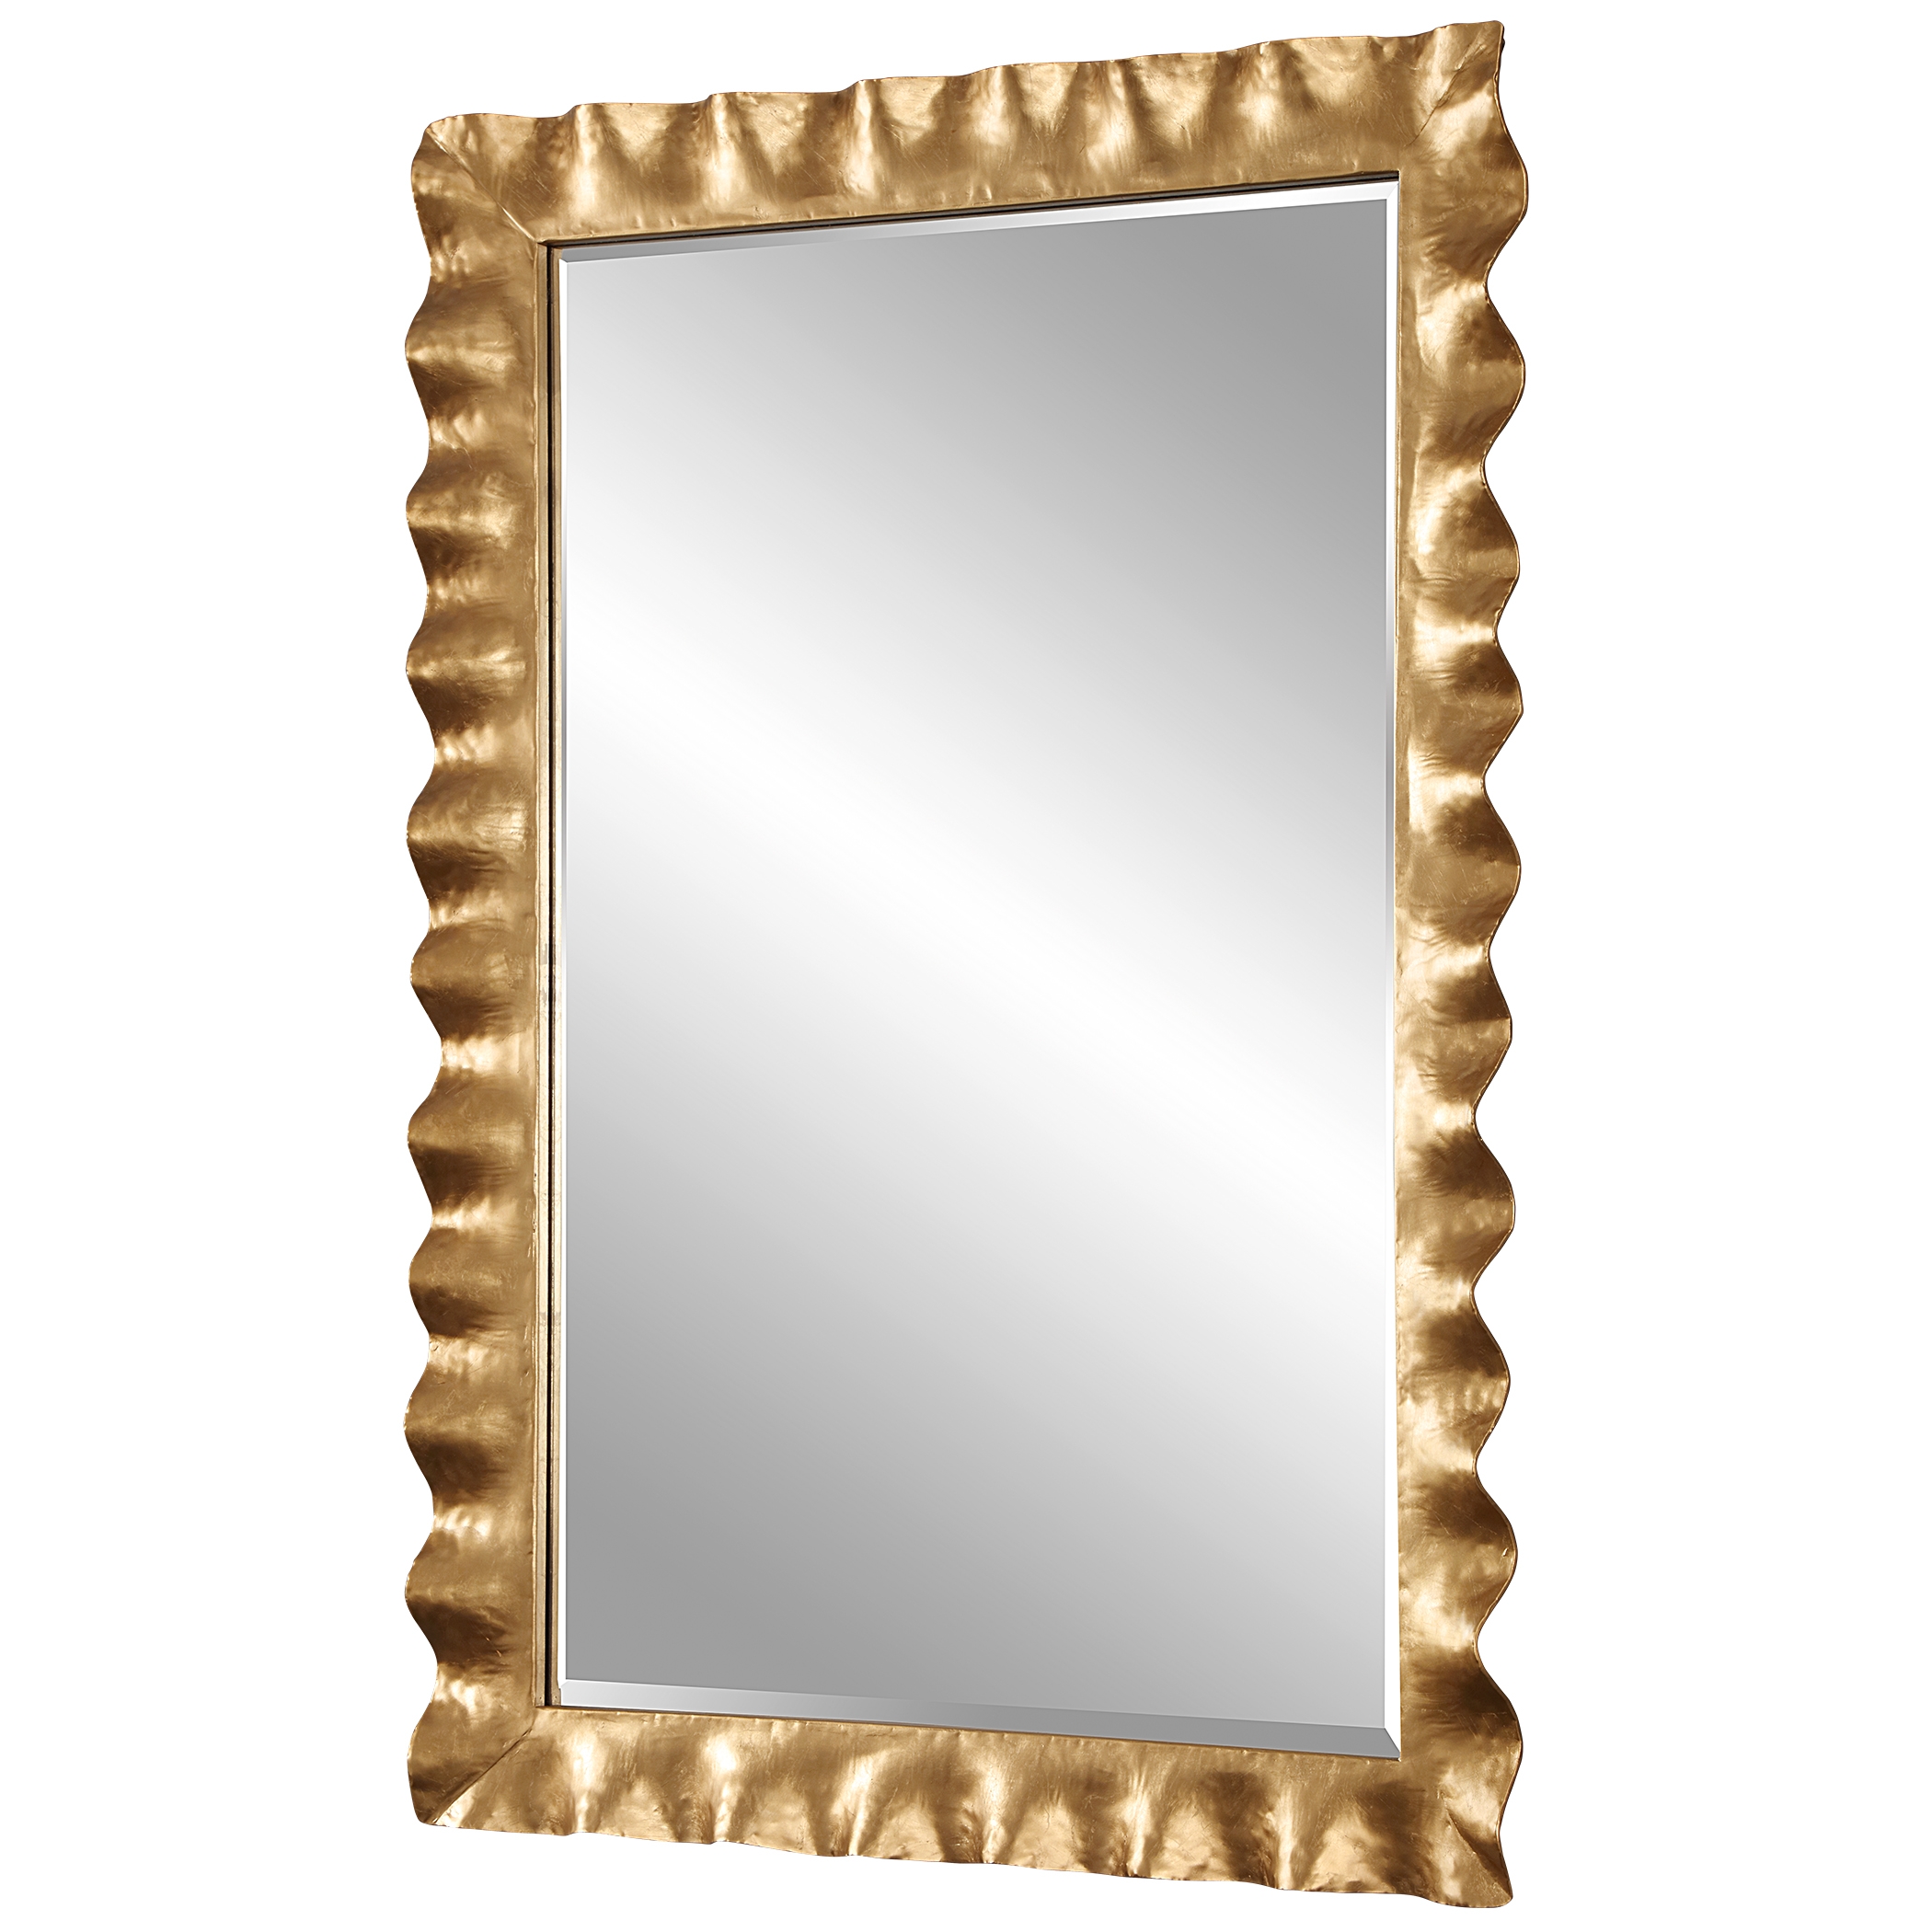 Haya Scalloped Gold Mirror - Image 2